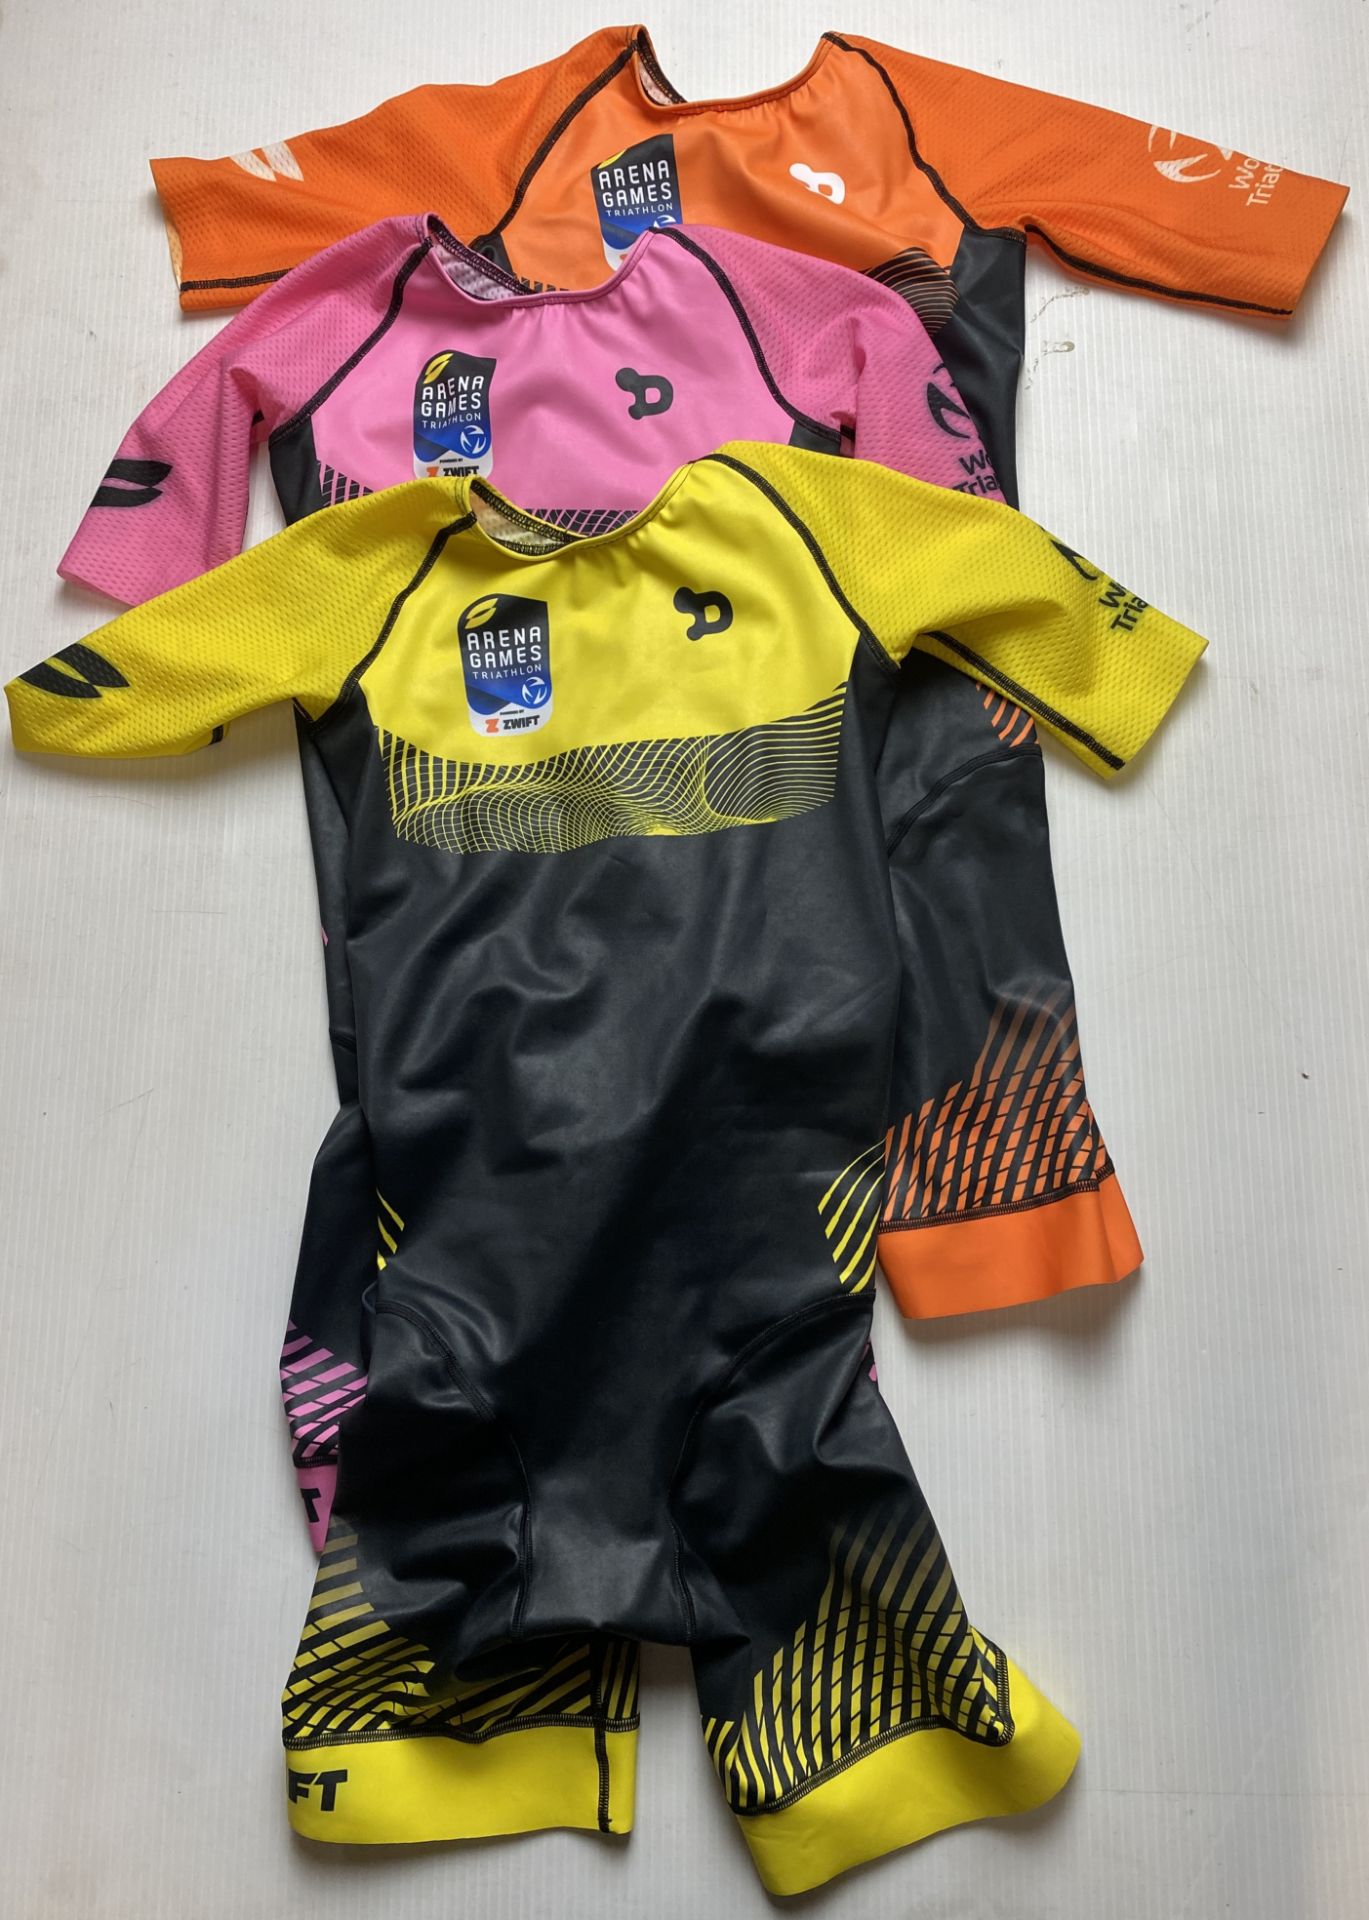 3 x Dryworld Arena Games Triathlon Elite Women's Race Suits - Black/Yellow, Black/Pink,